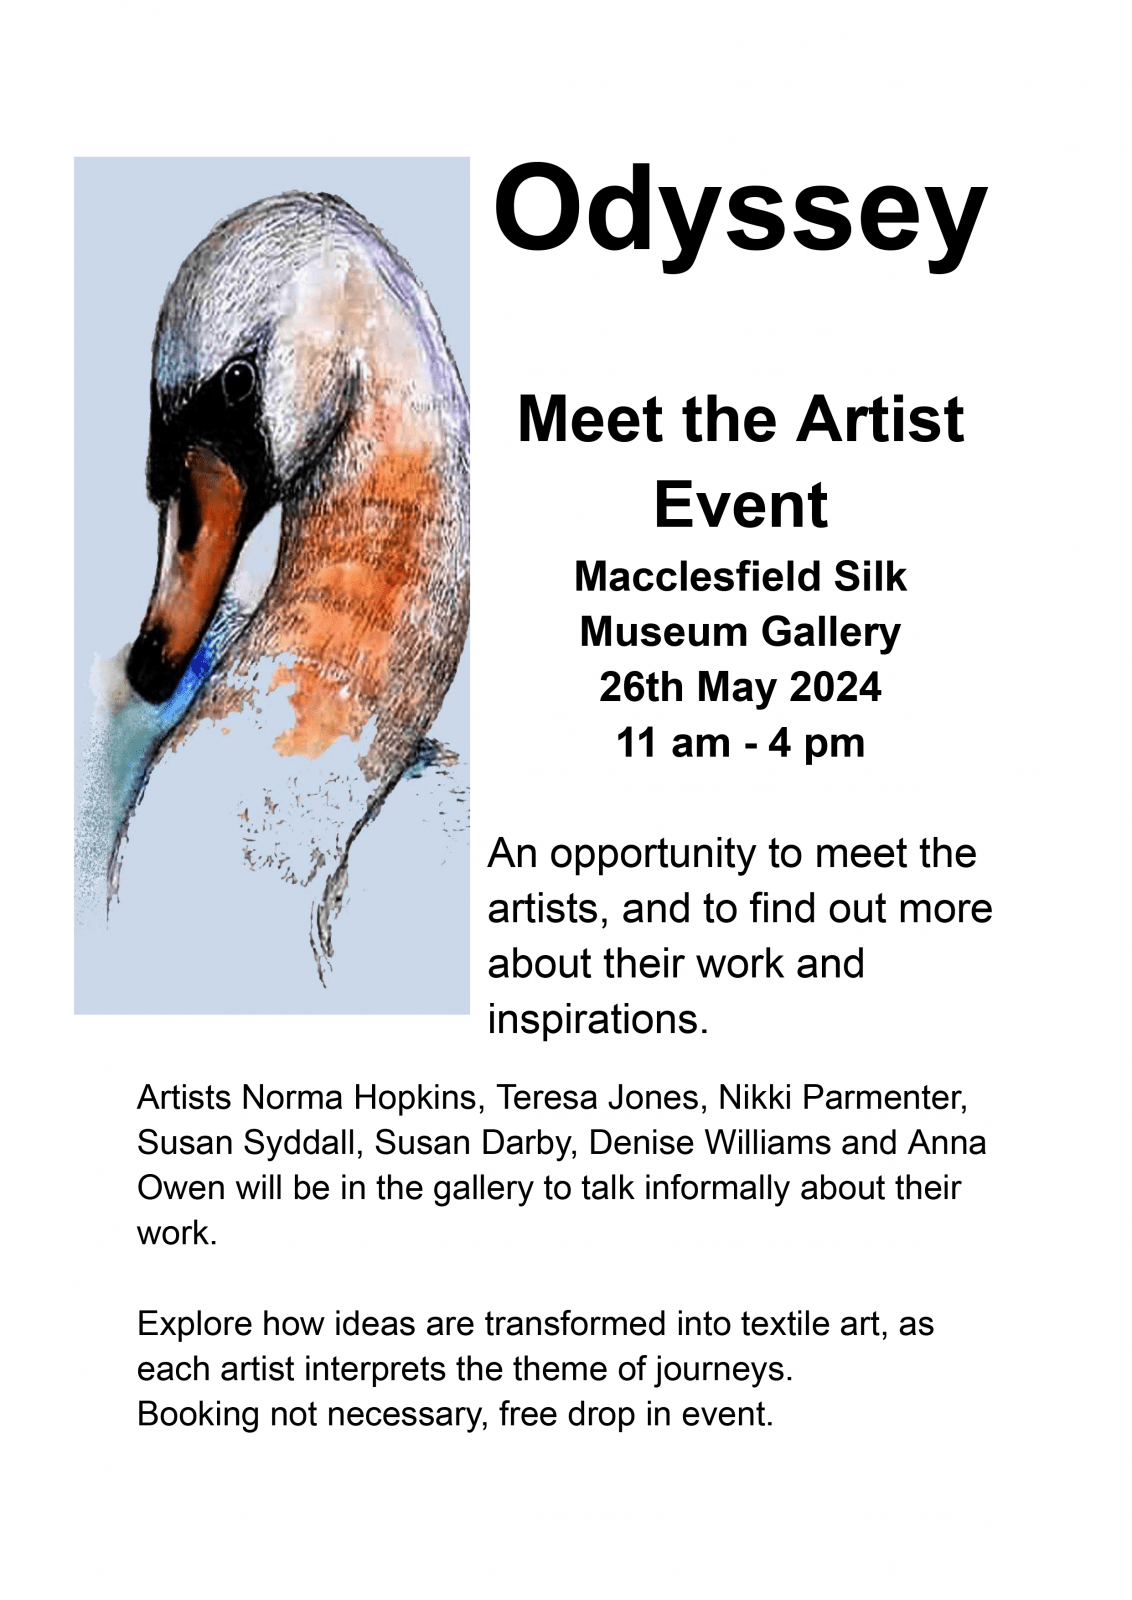 Odyssey meet artist event odyssey notice-1